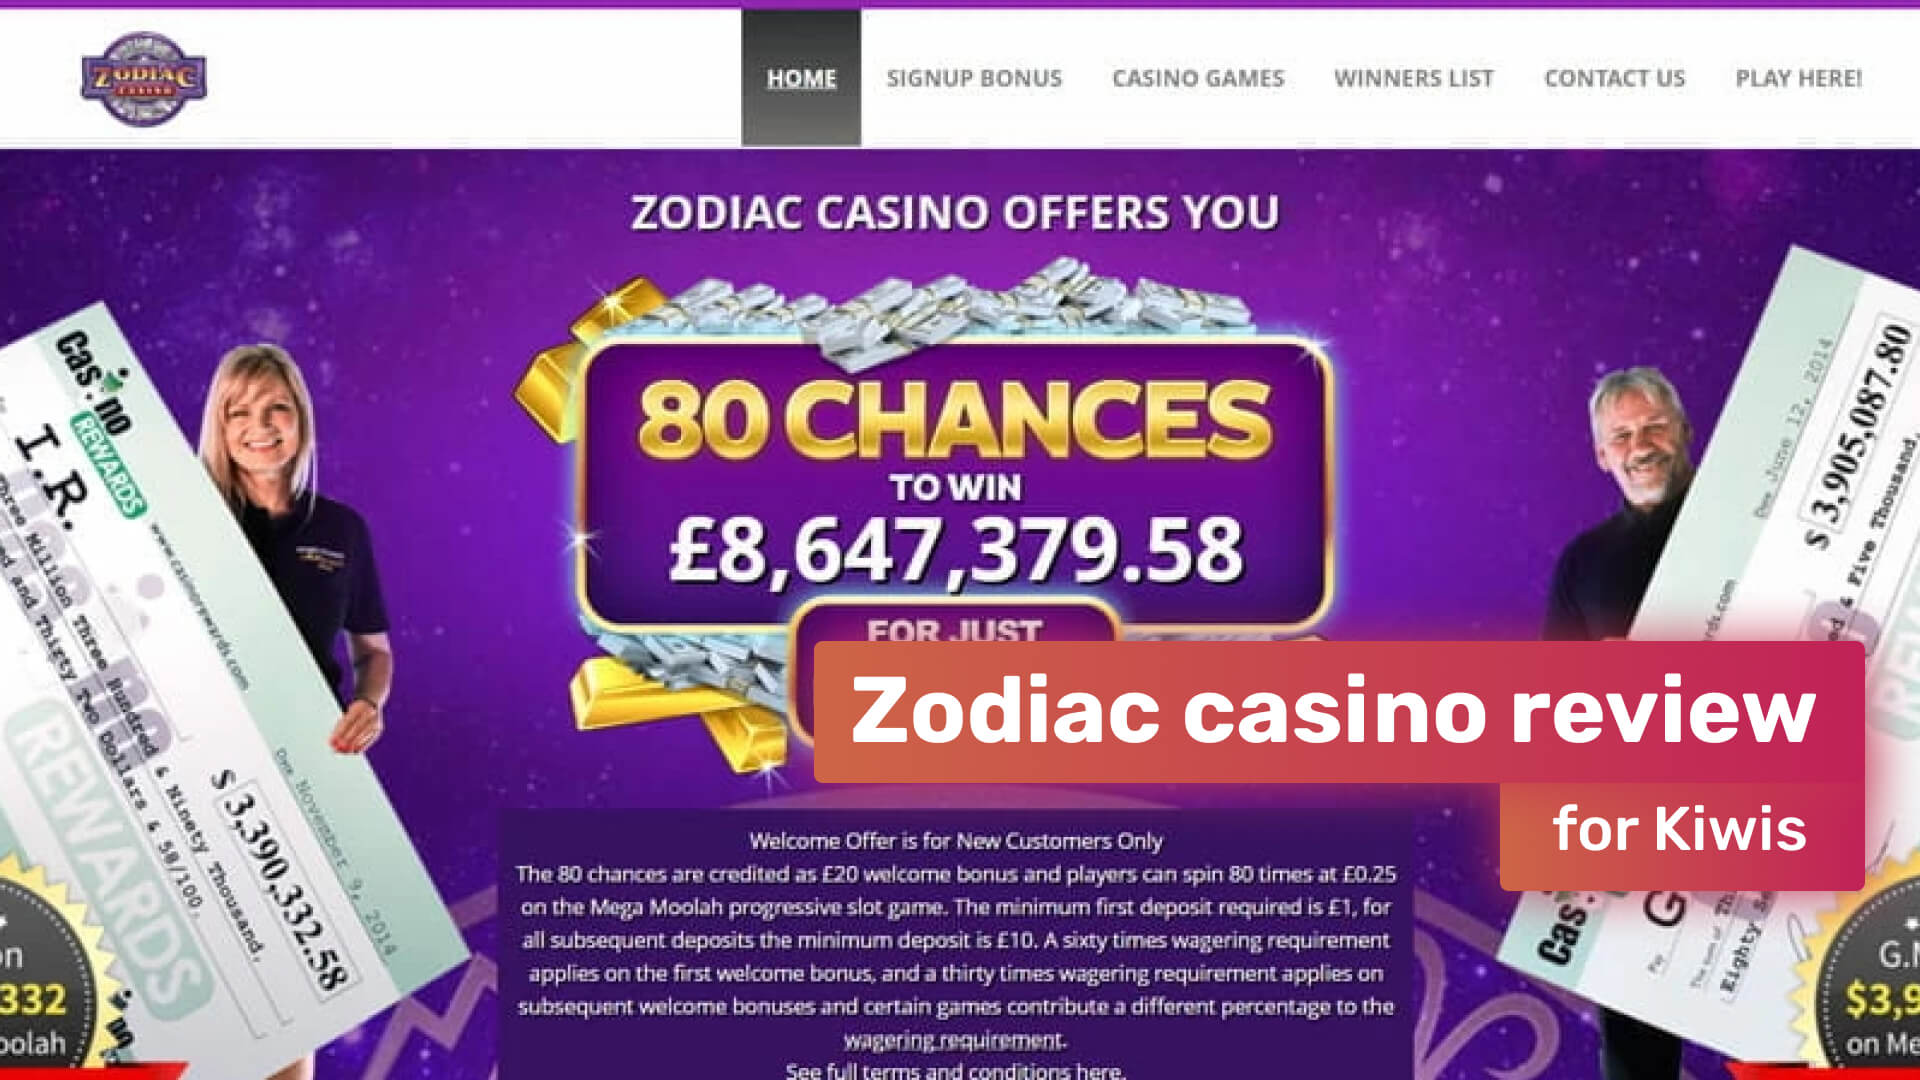 Zodiac casino review for Kiwis!